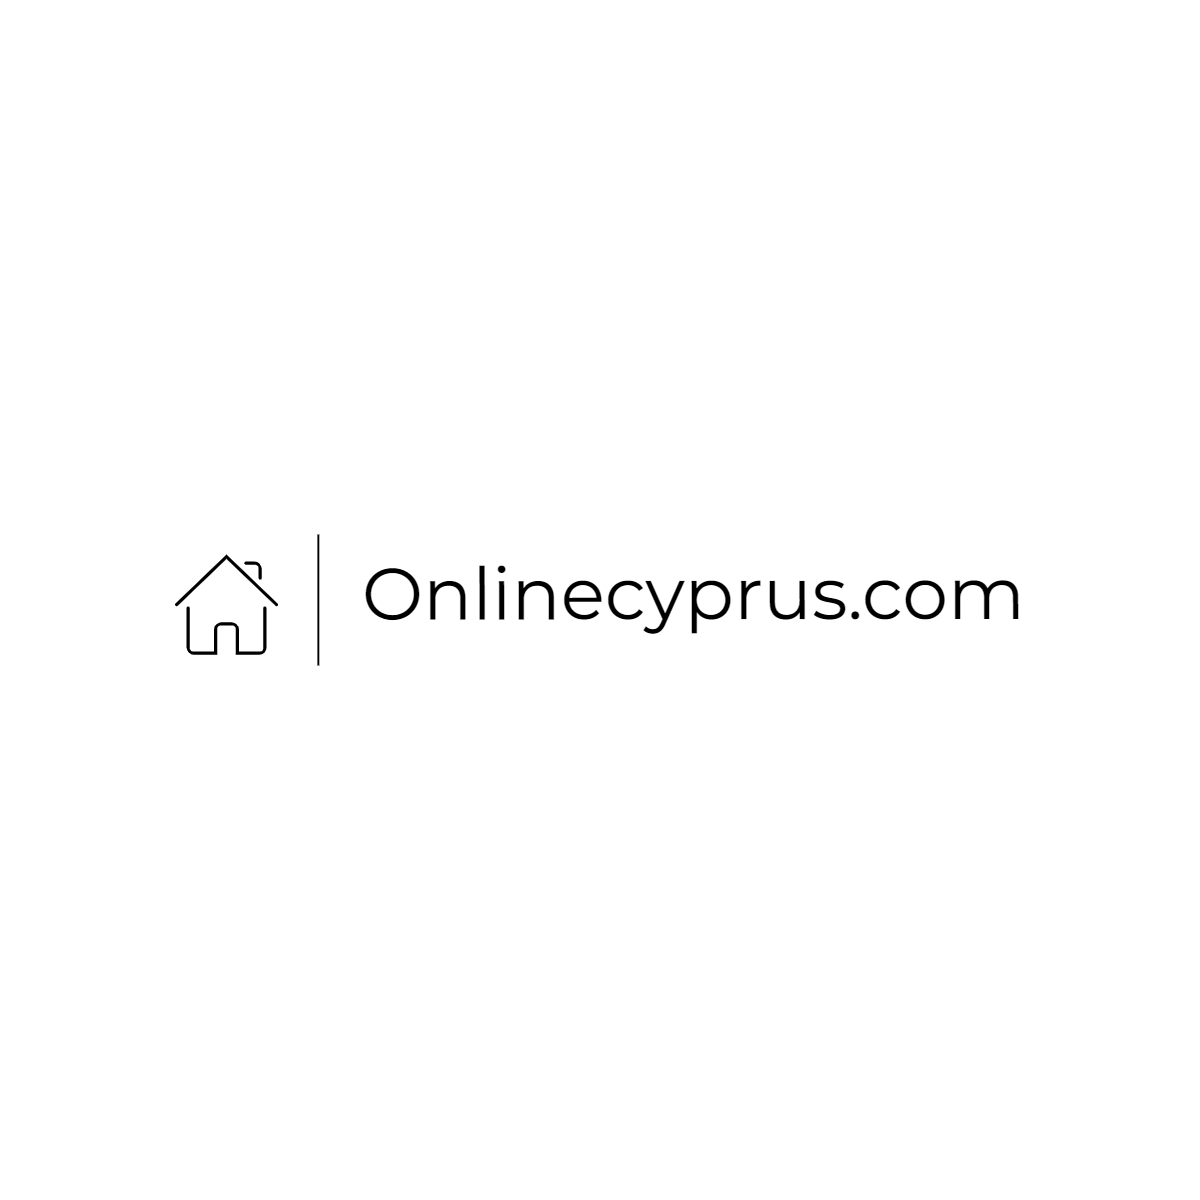 Onlinecypruscom logos black